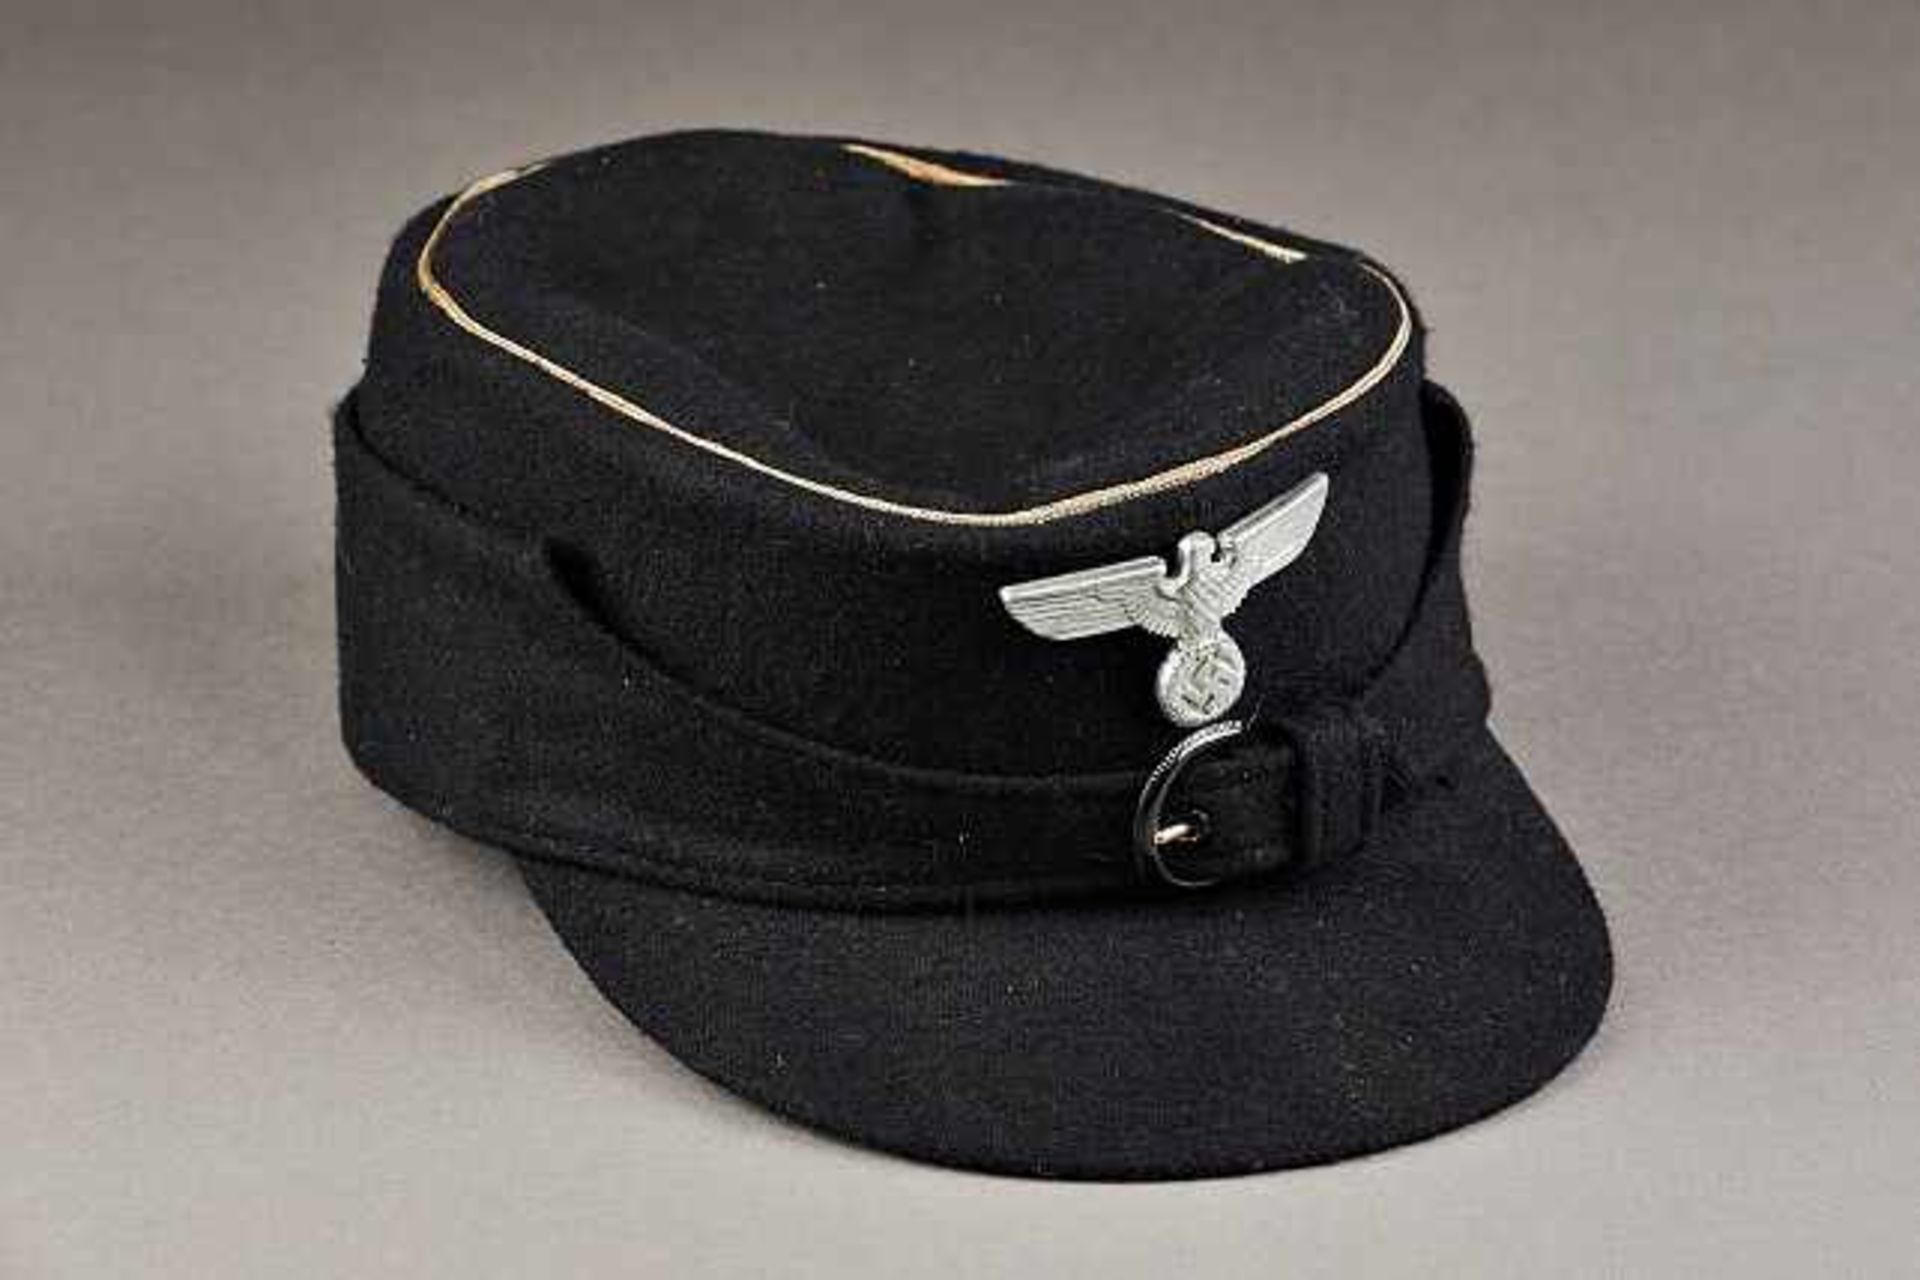 Deutsches Reich 1933 - 1945 - HJ - Hitlerjugend : HJ Winter Cap for Leaders.Black winter cap